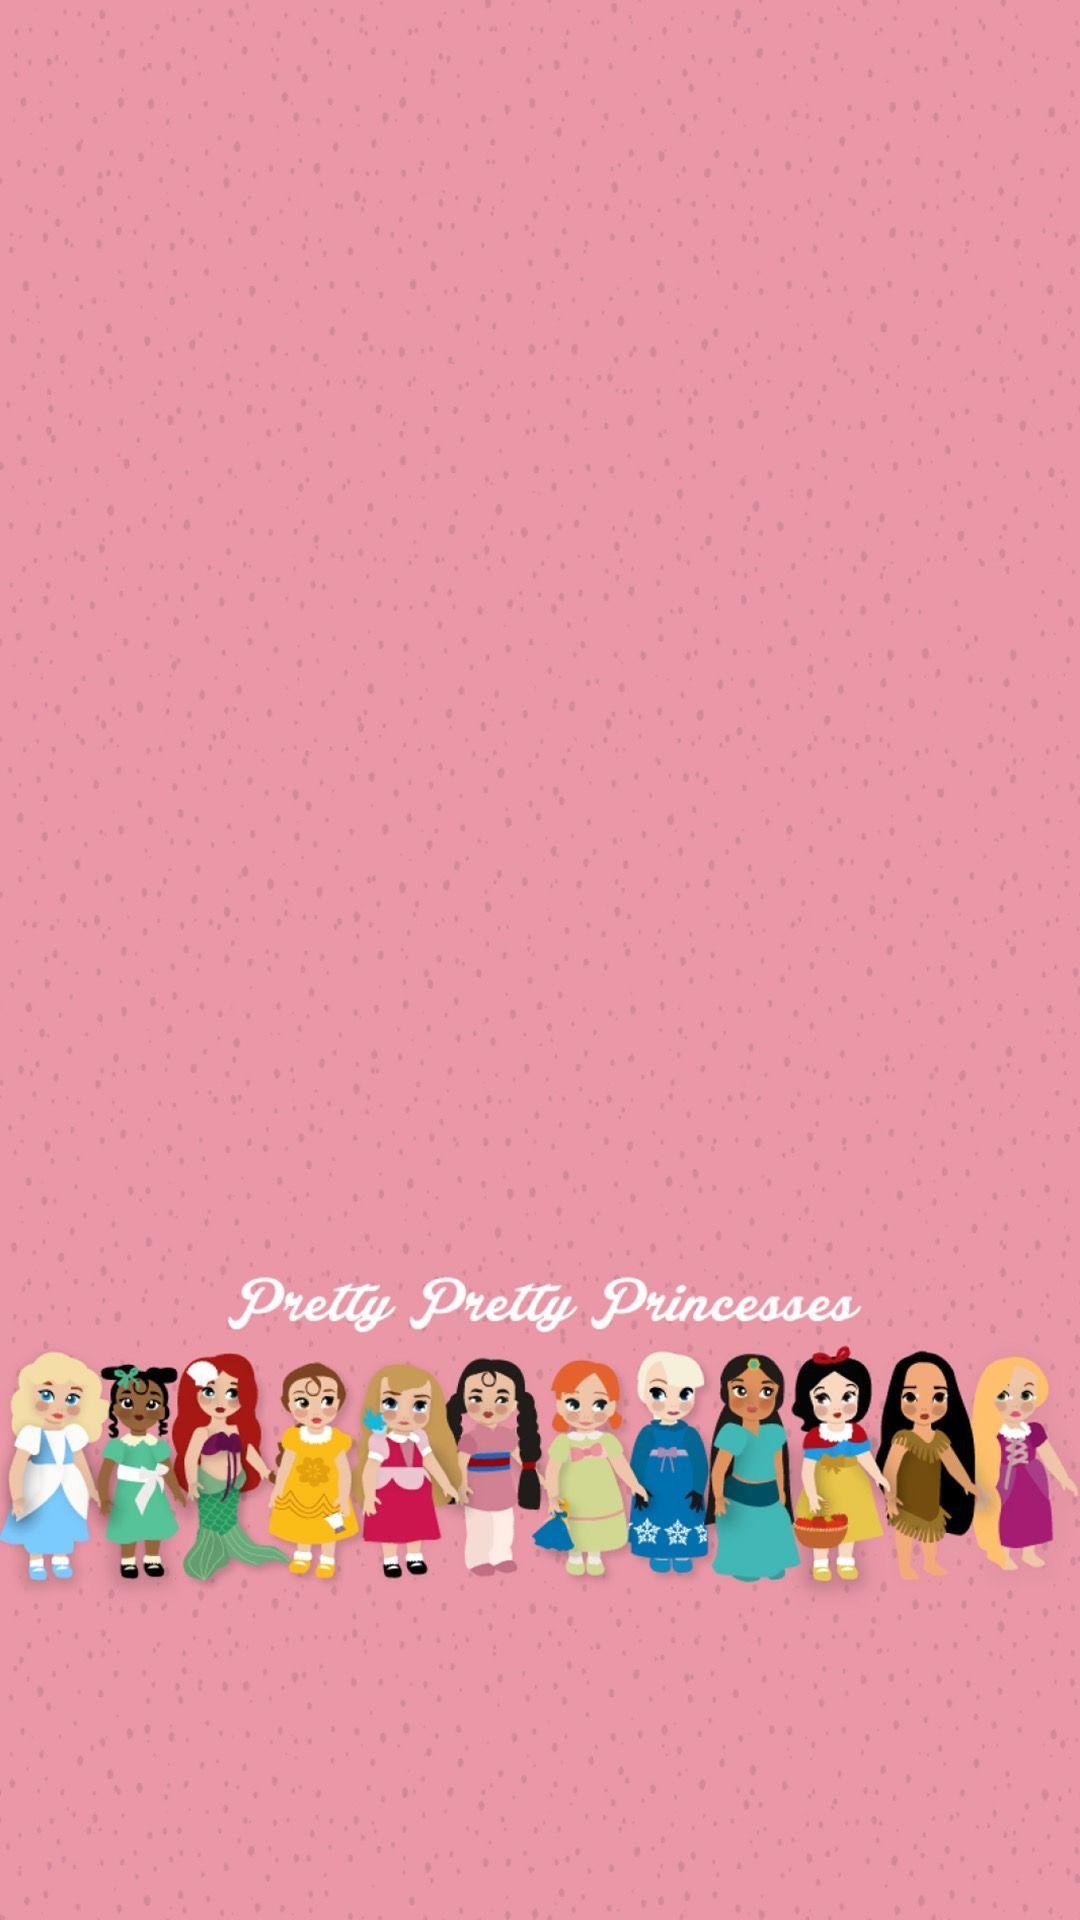 Cinderella - Disney Princess Wallpaper (39980651) - Fanpop